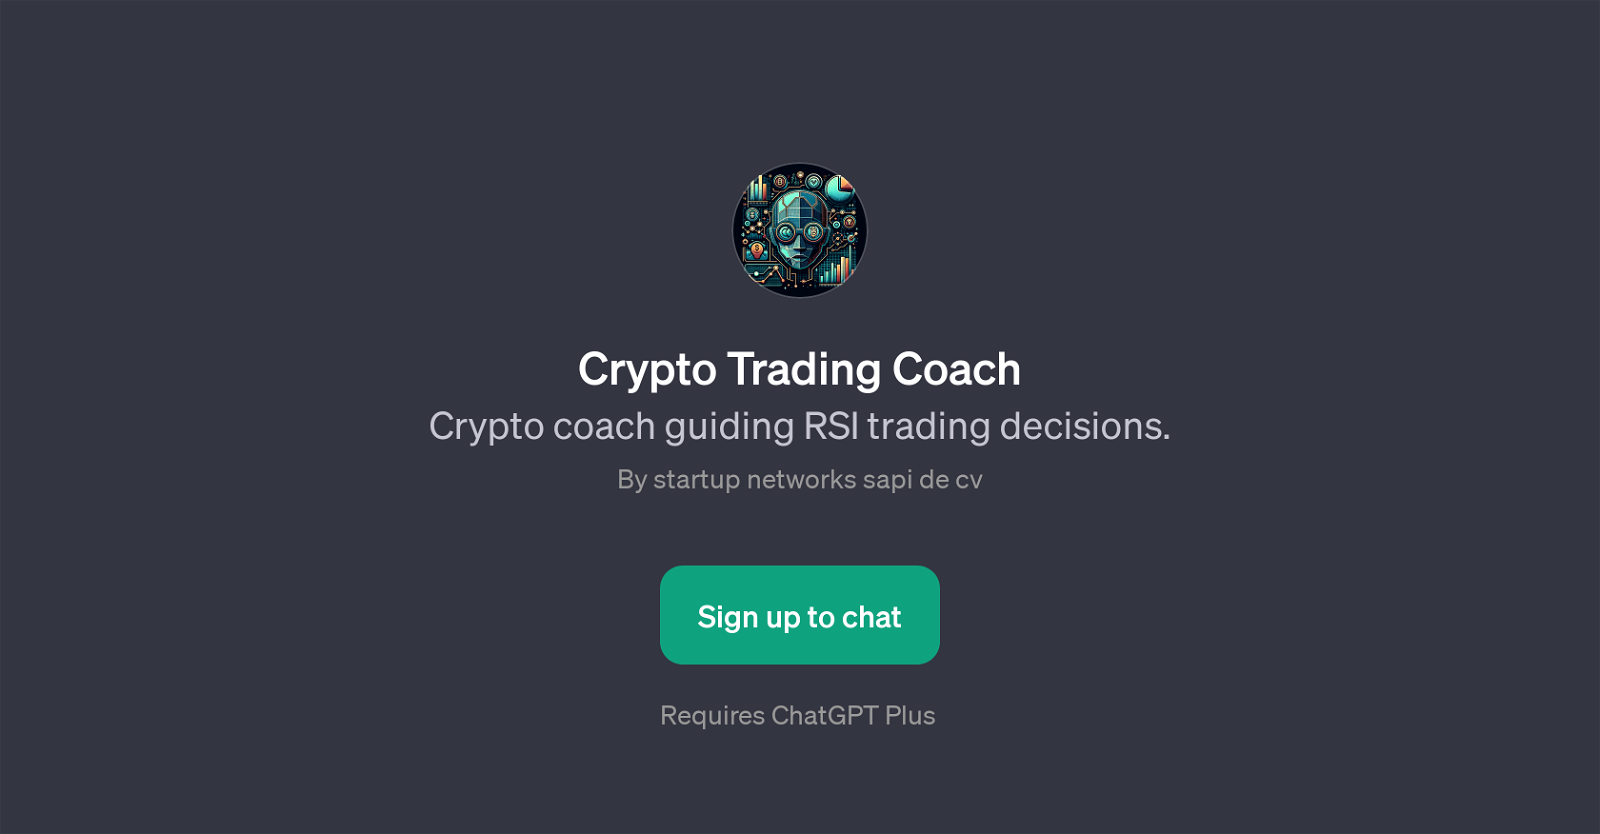 Crypto Trading Coach website